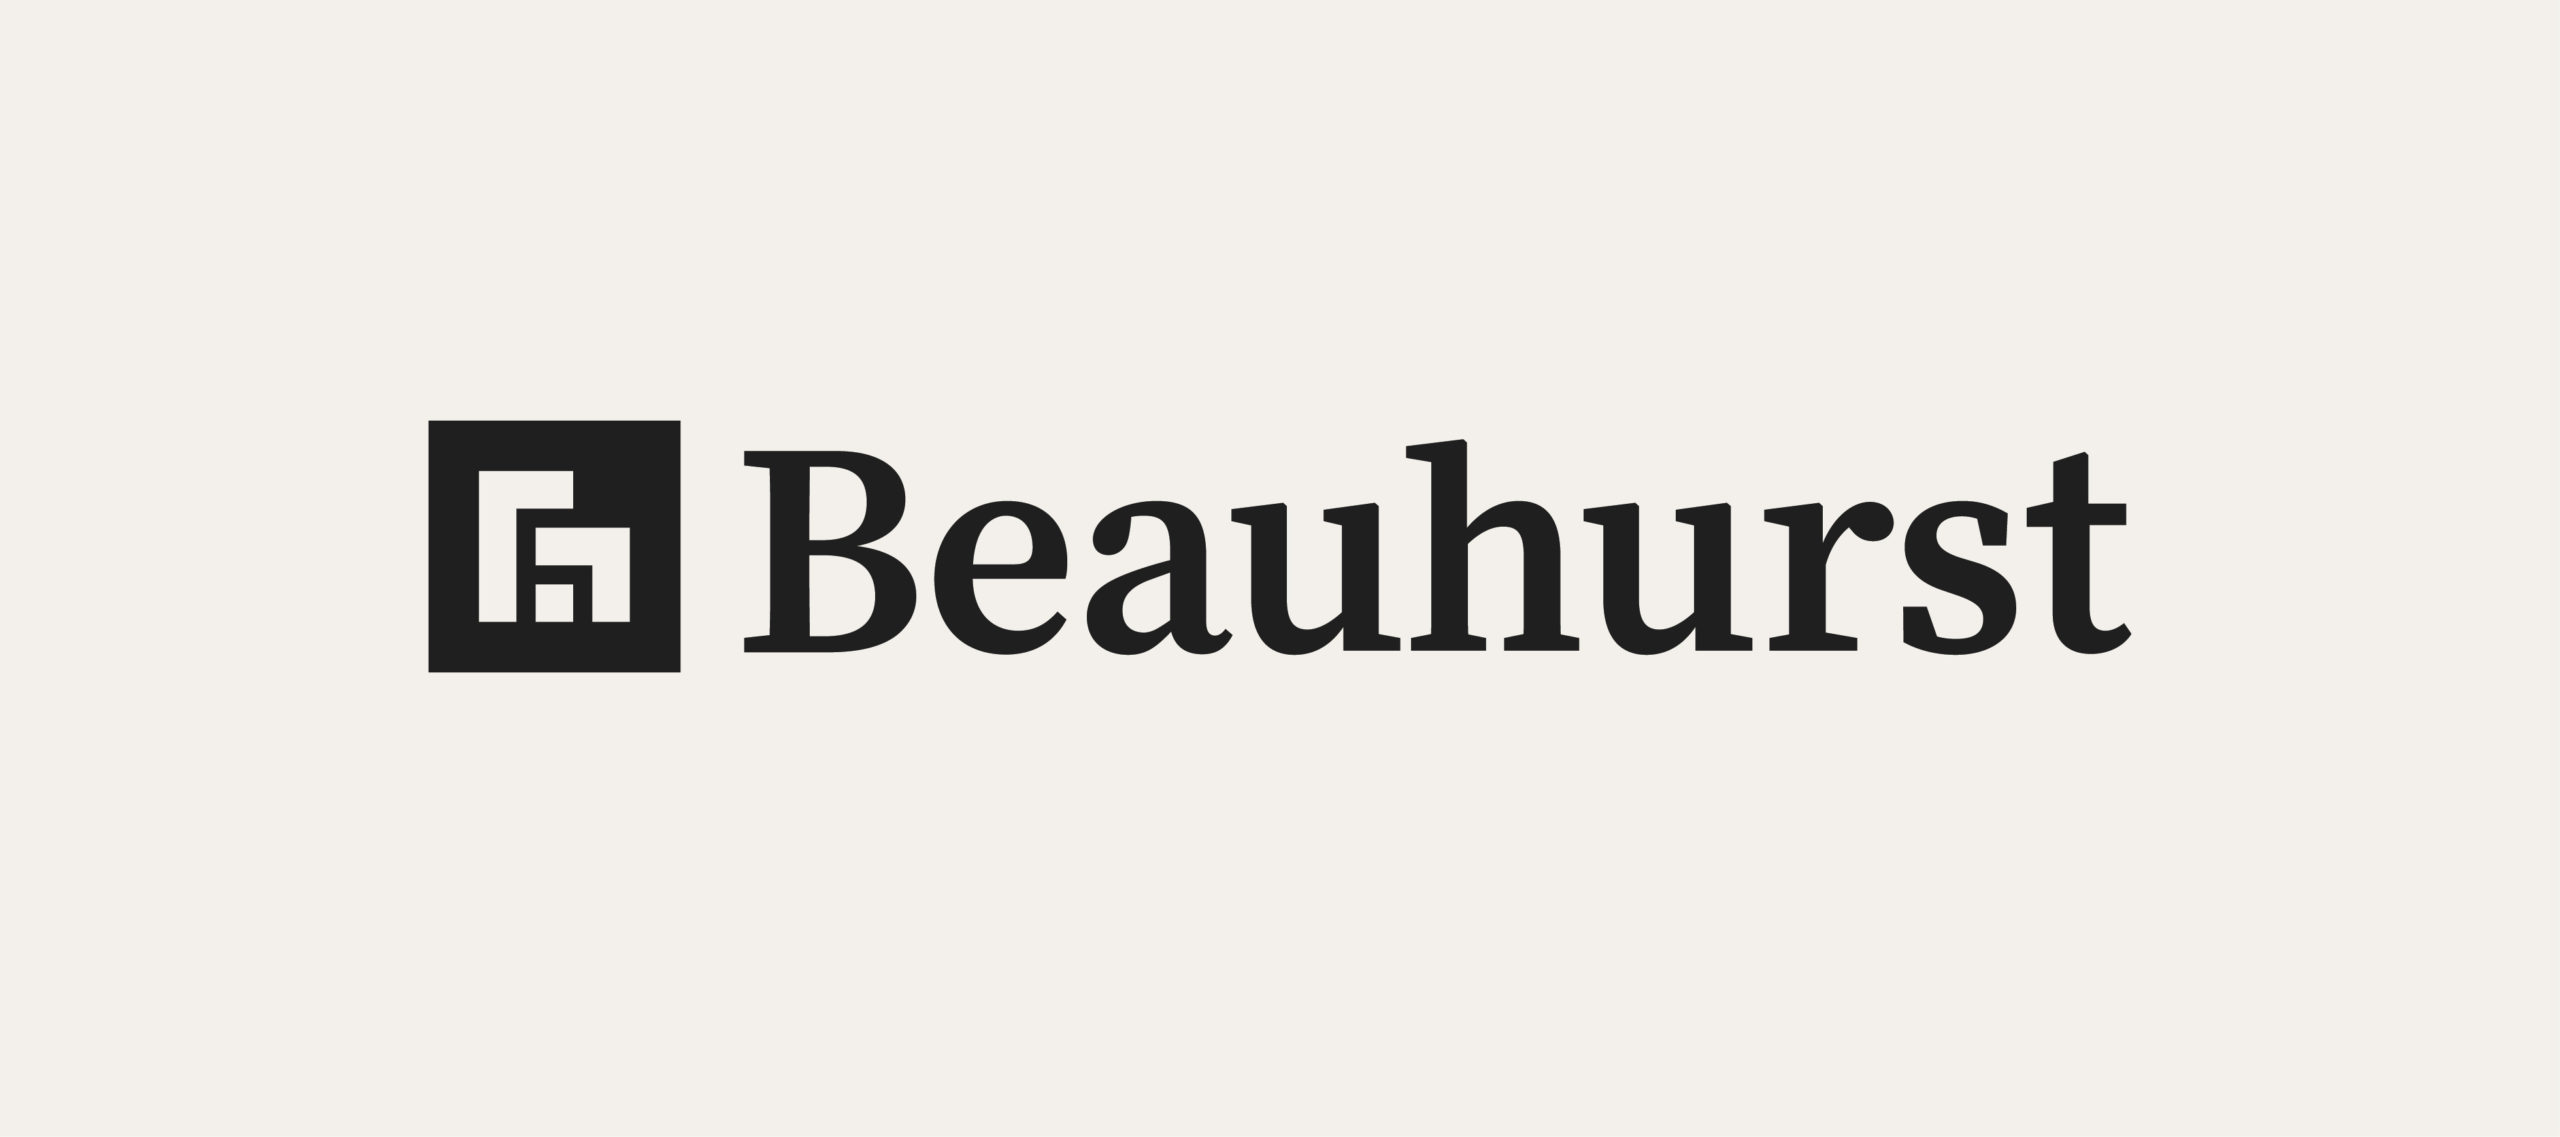 New Beauhurst logo